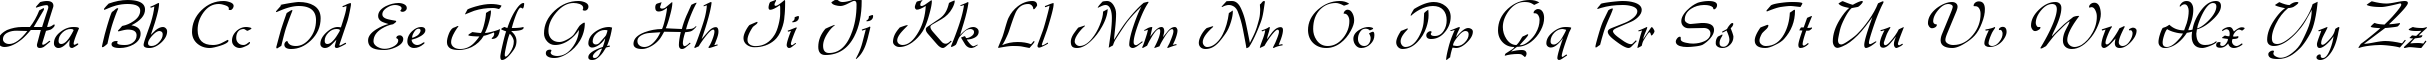 Пример написания английского алфавита шрифтом Gabrielle